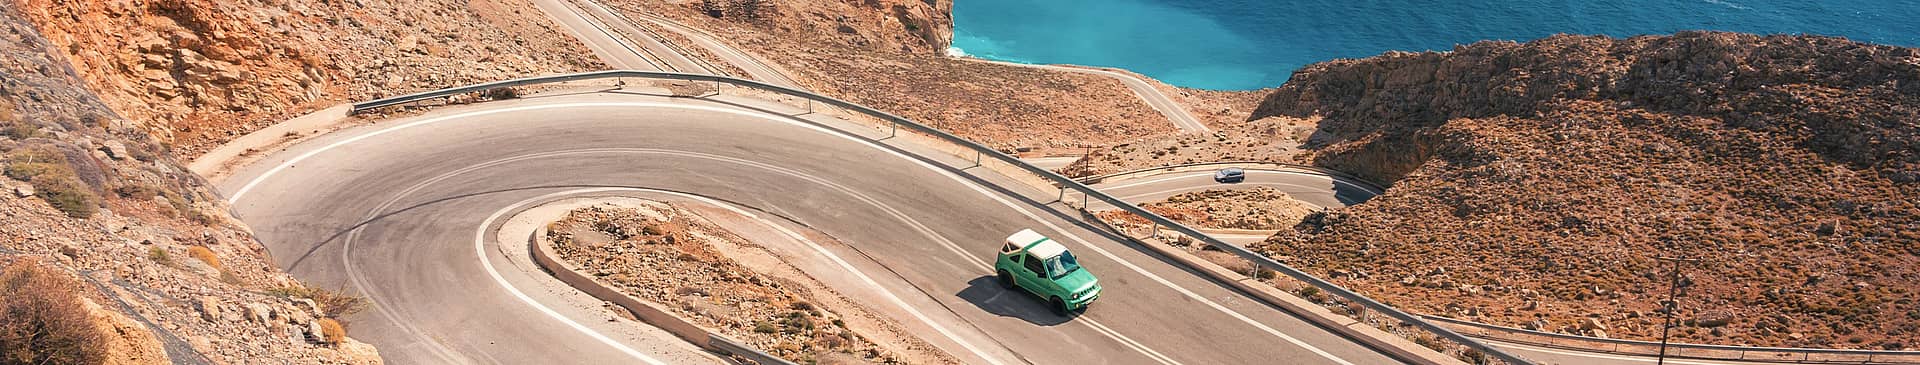 Creta on the road